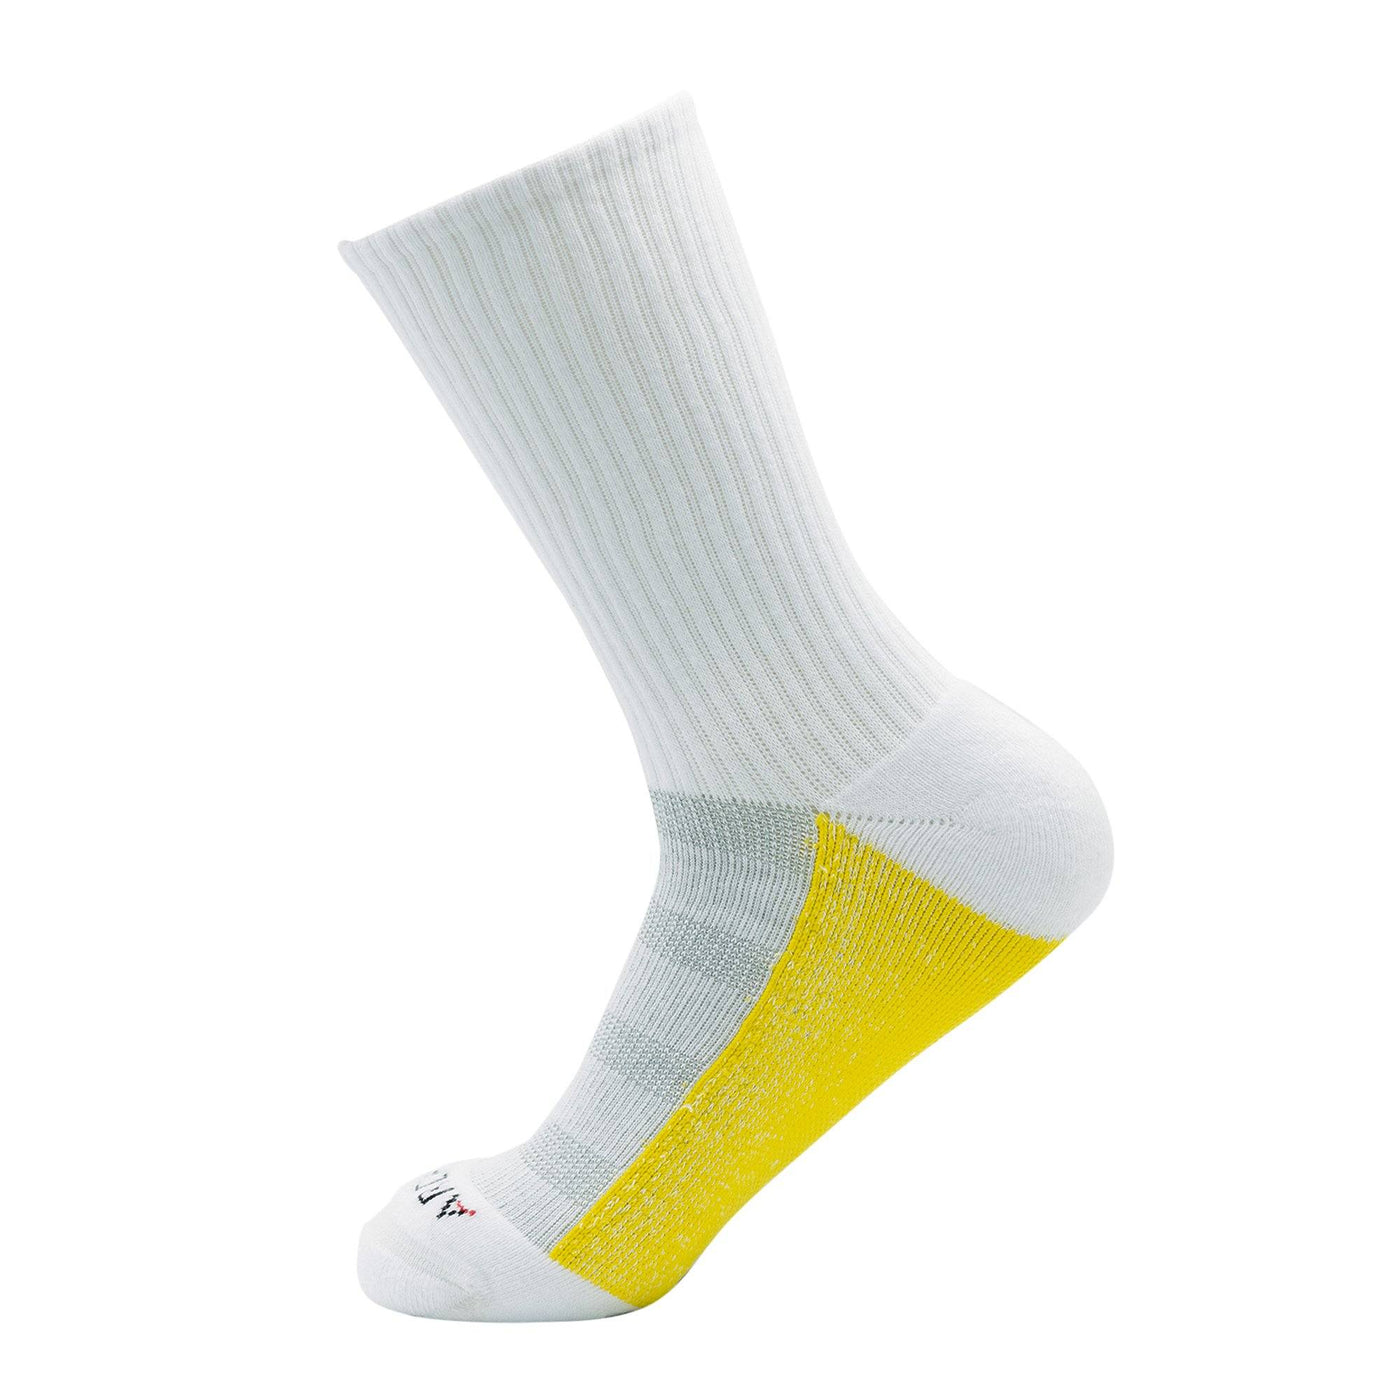 New Athletic Crew Sock in White improved version athletic socks ArchTek 